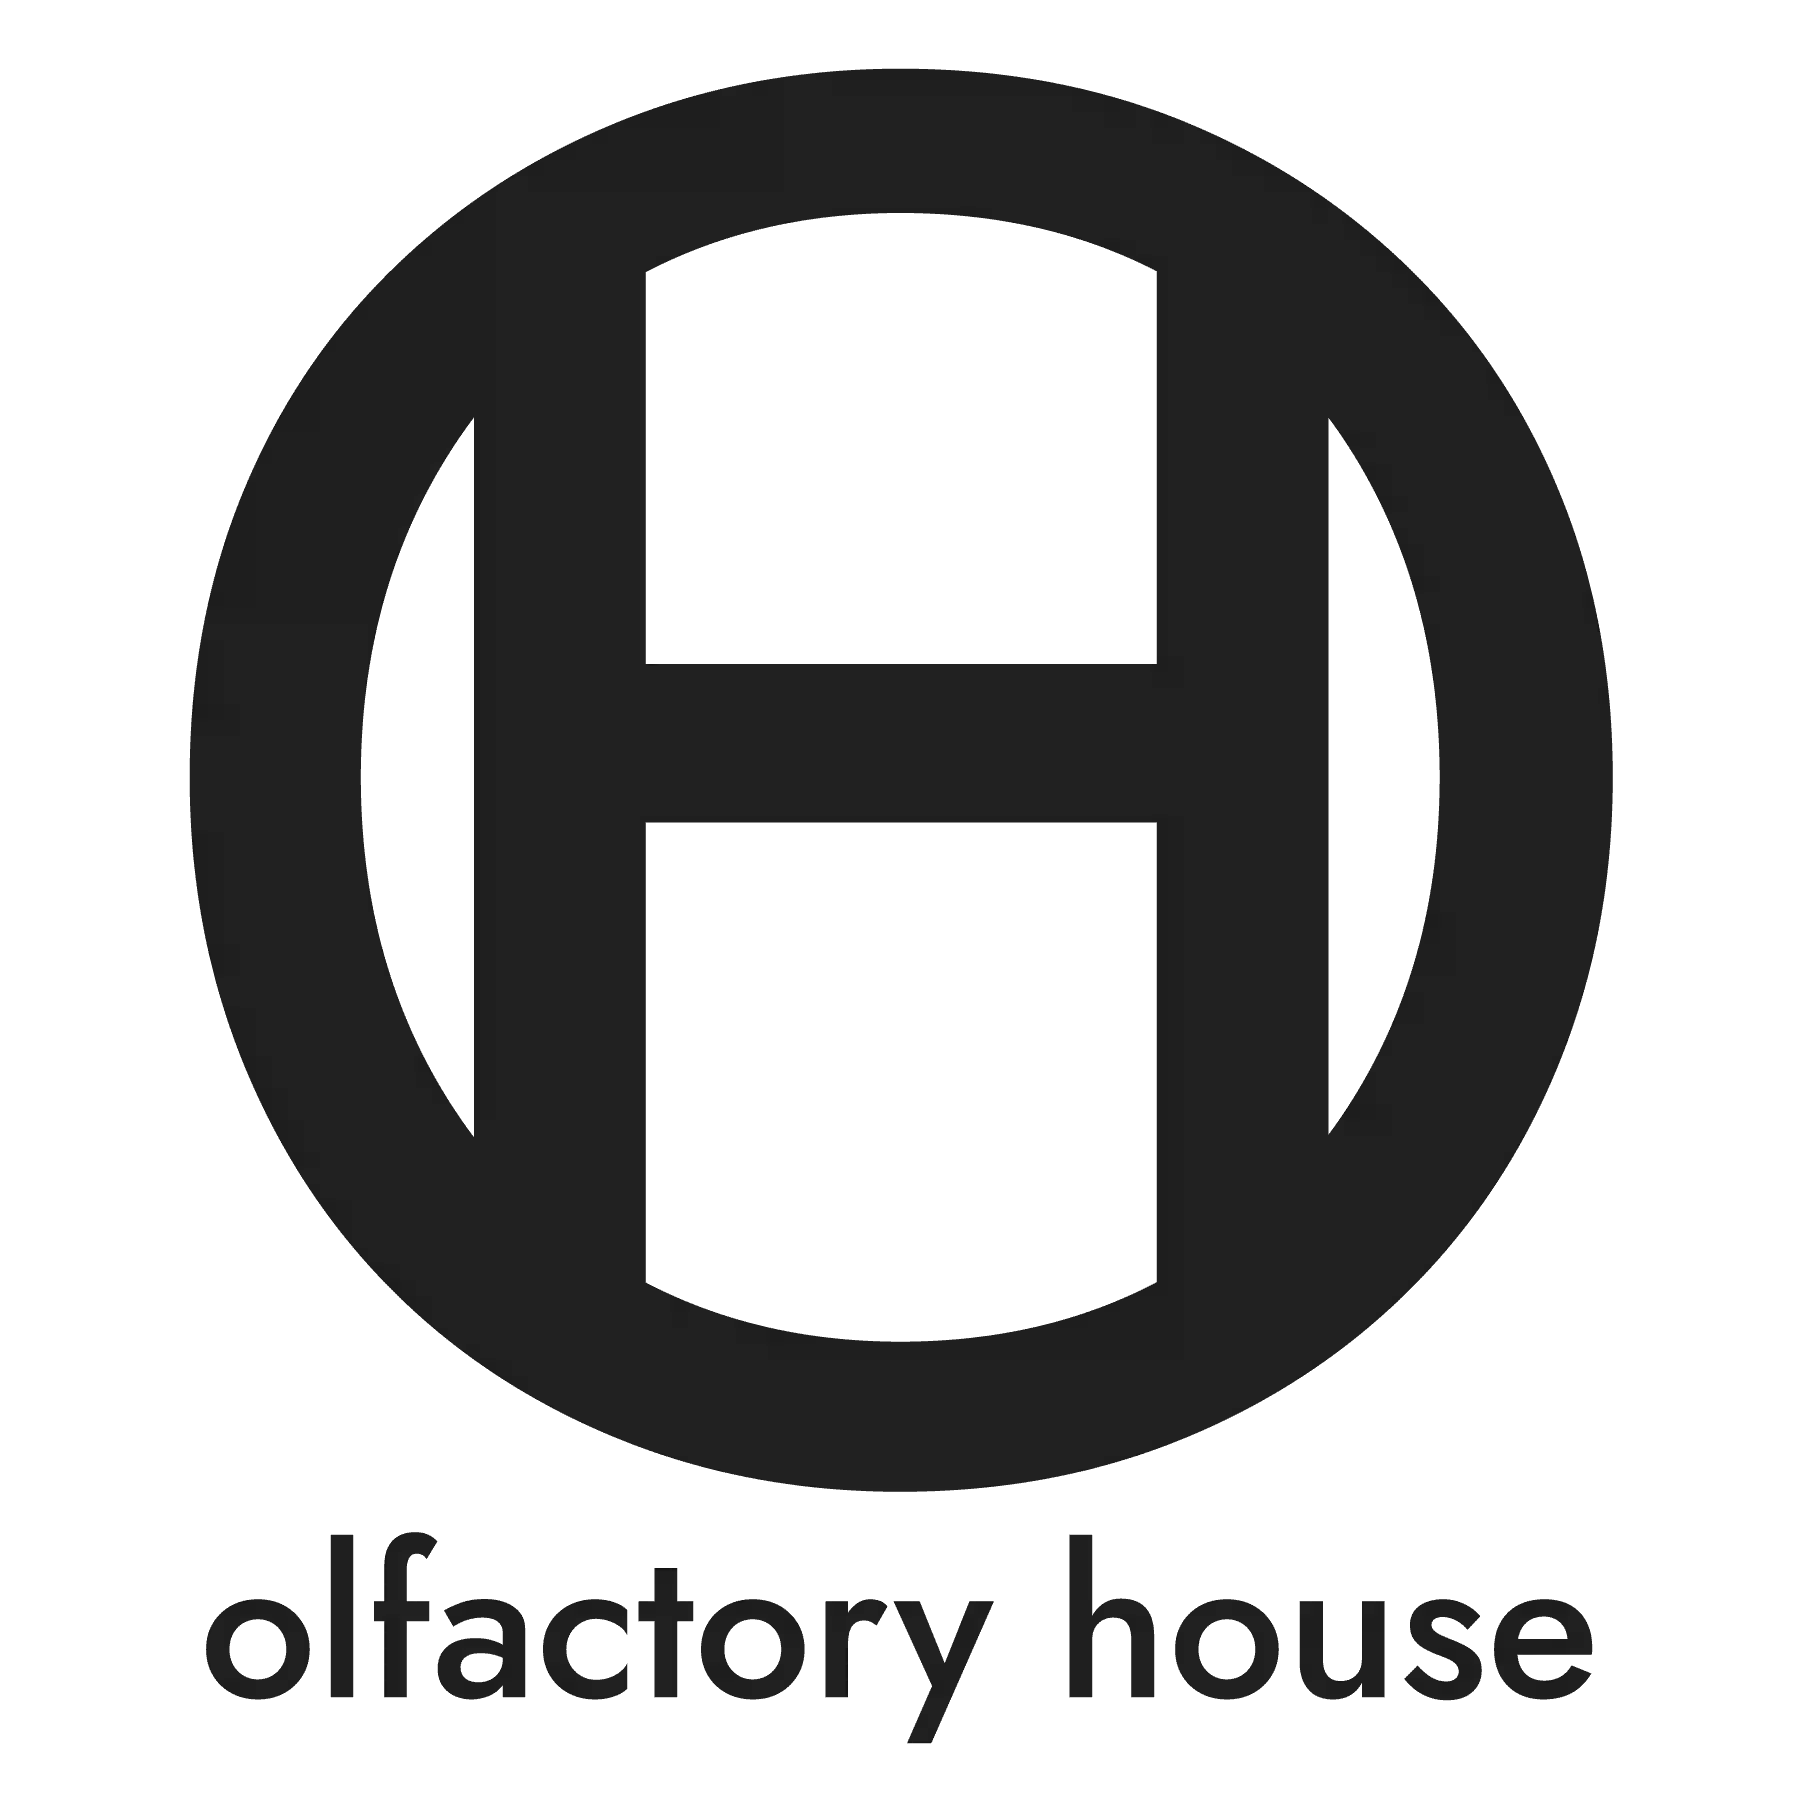 Olfactory House